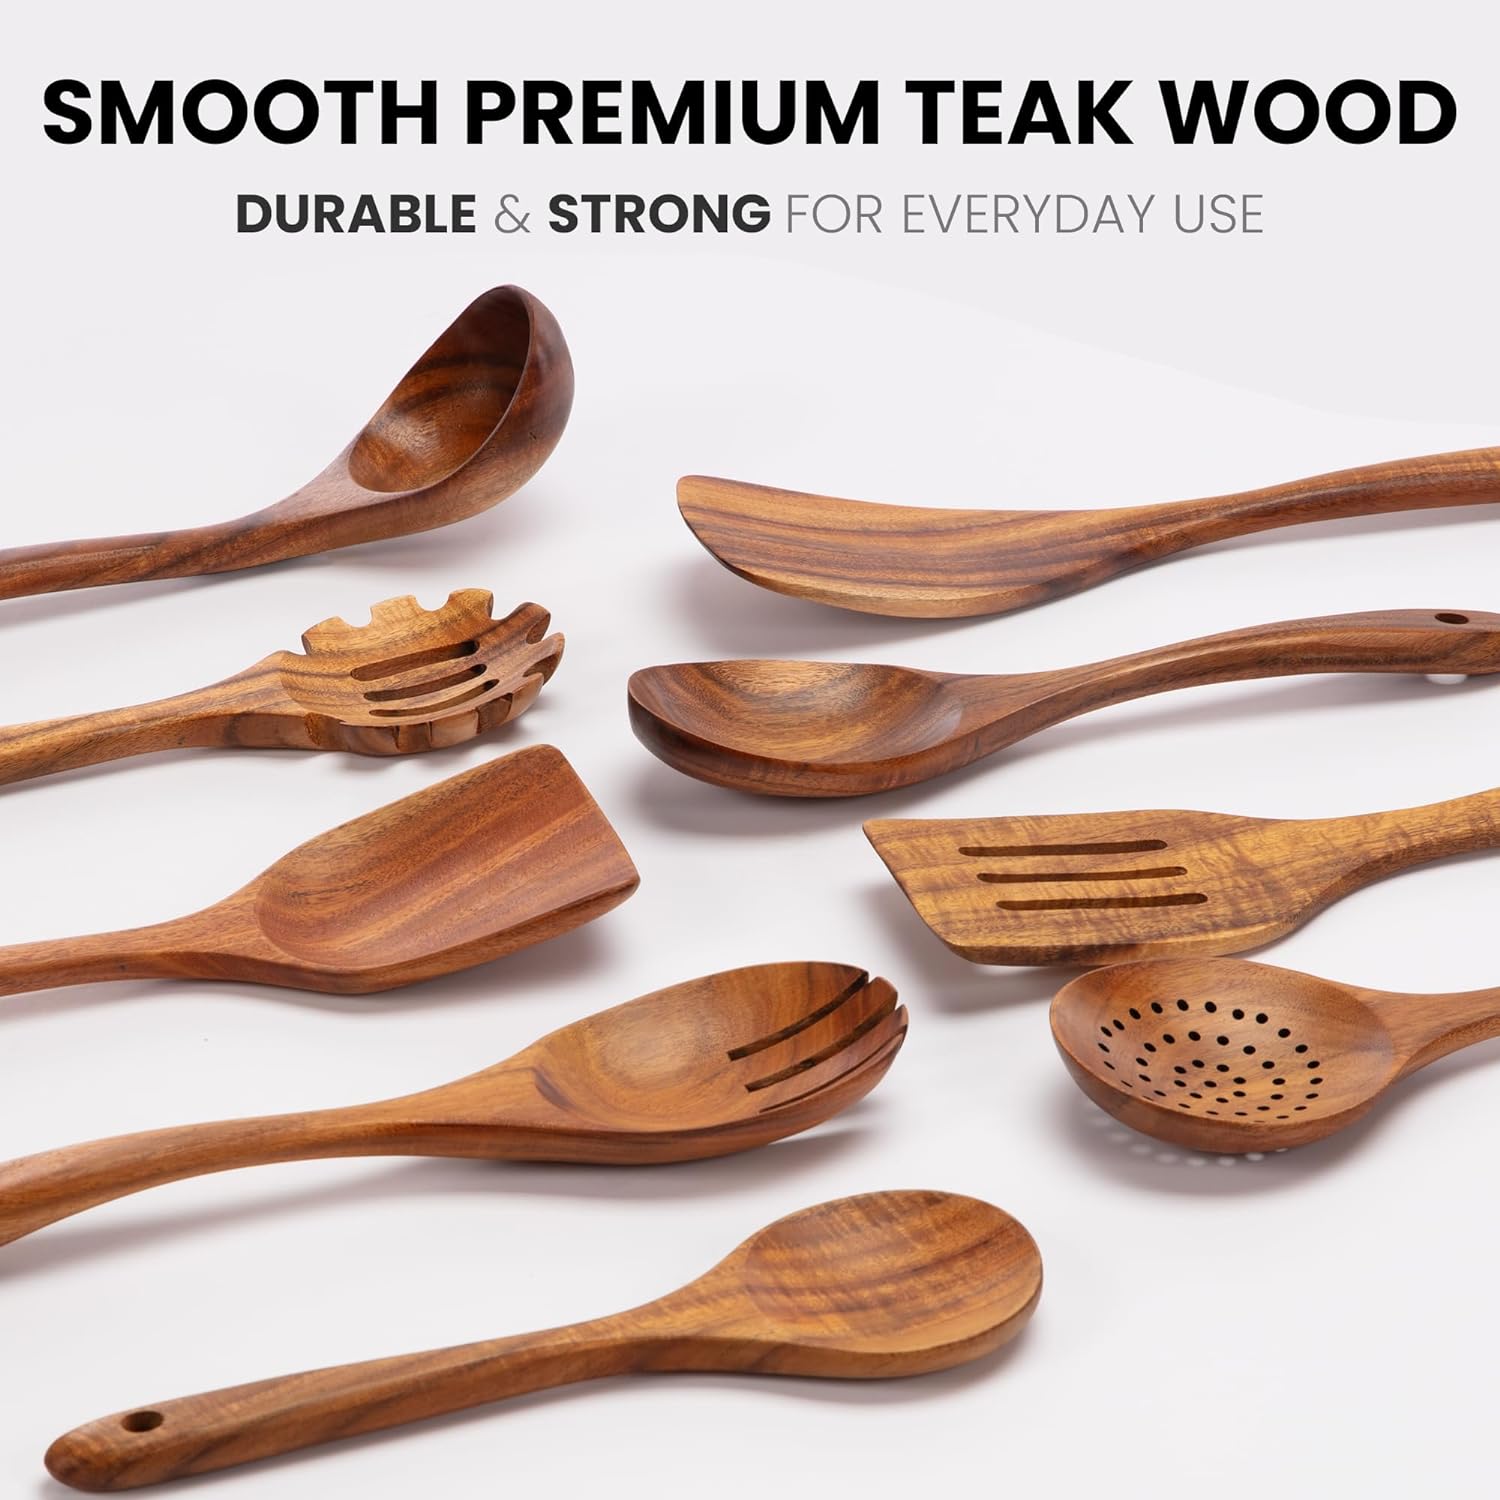 Smooth premium teak wood utensil set